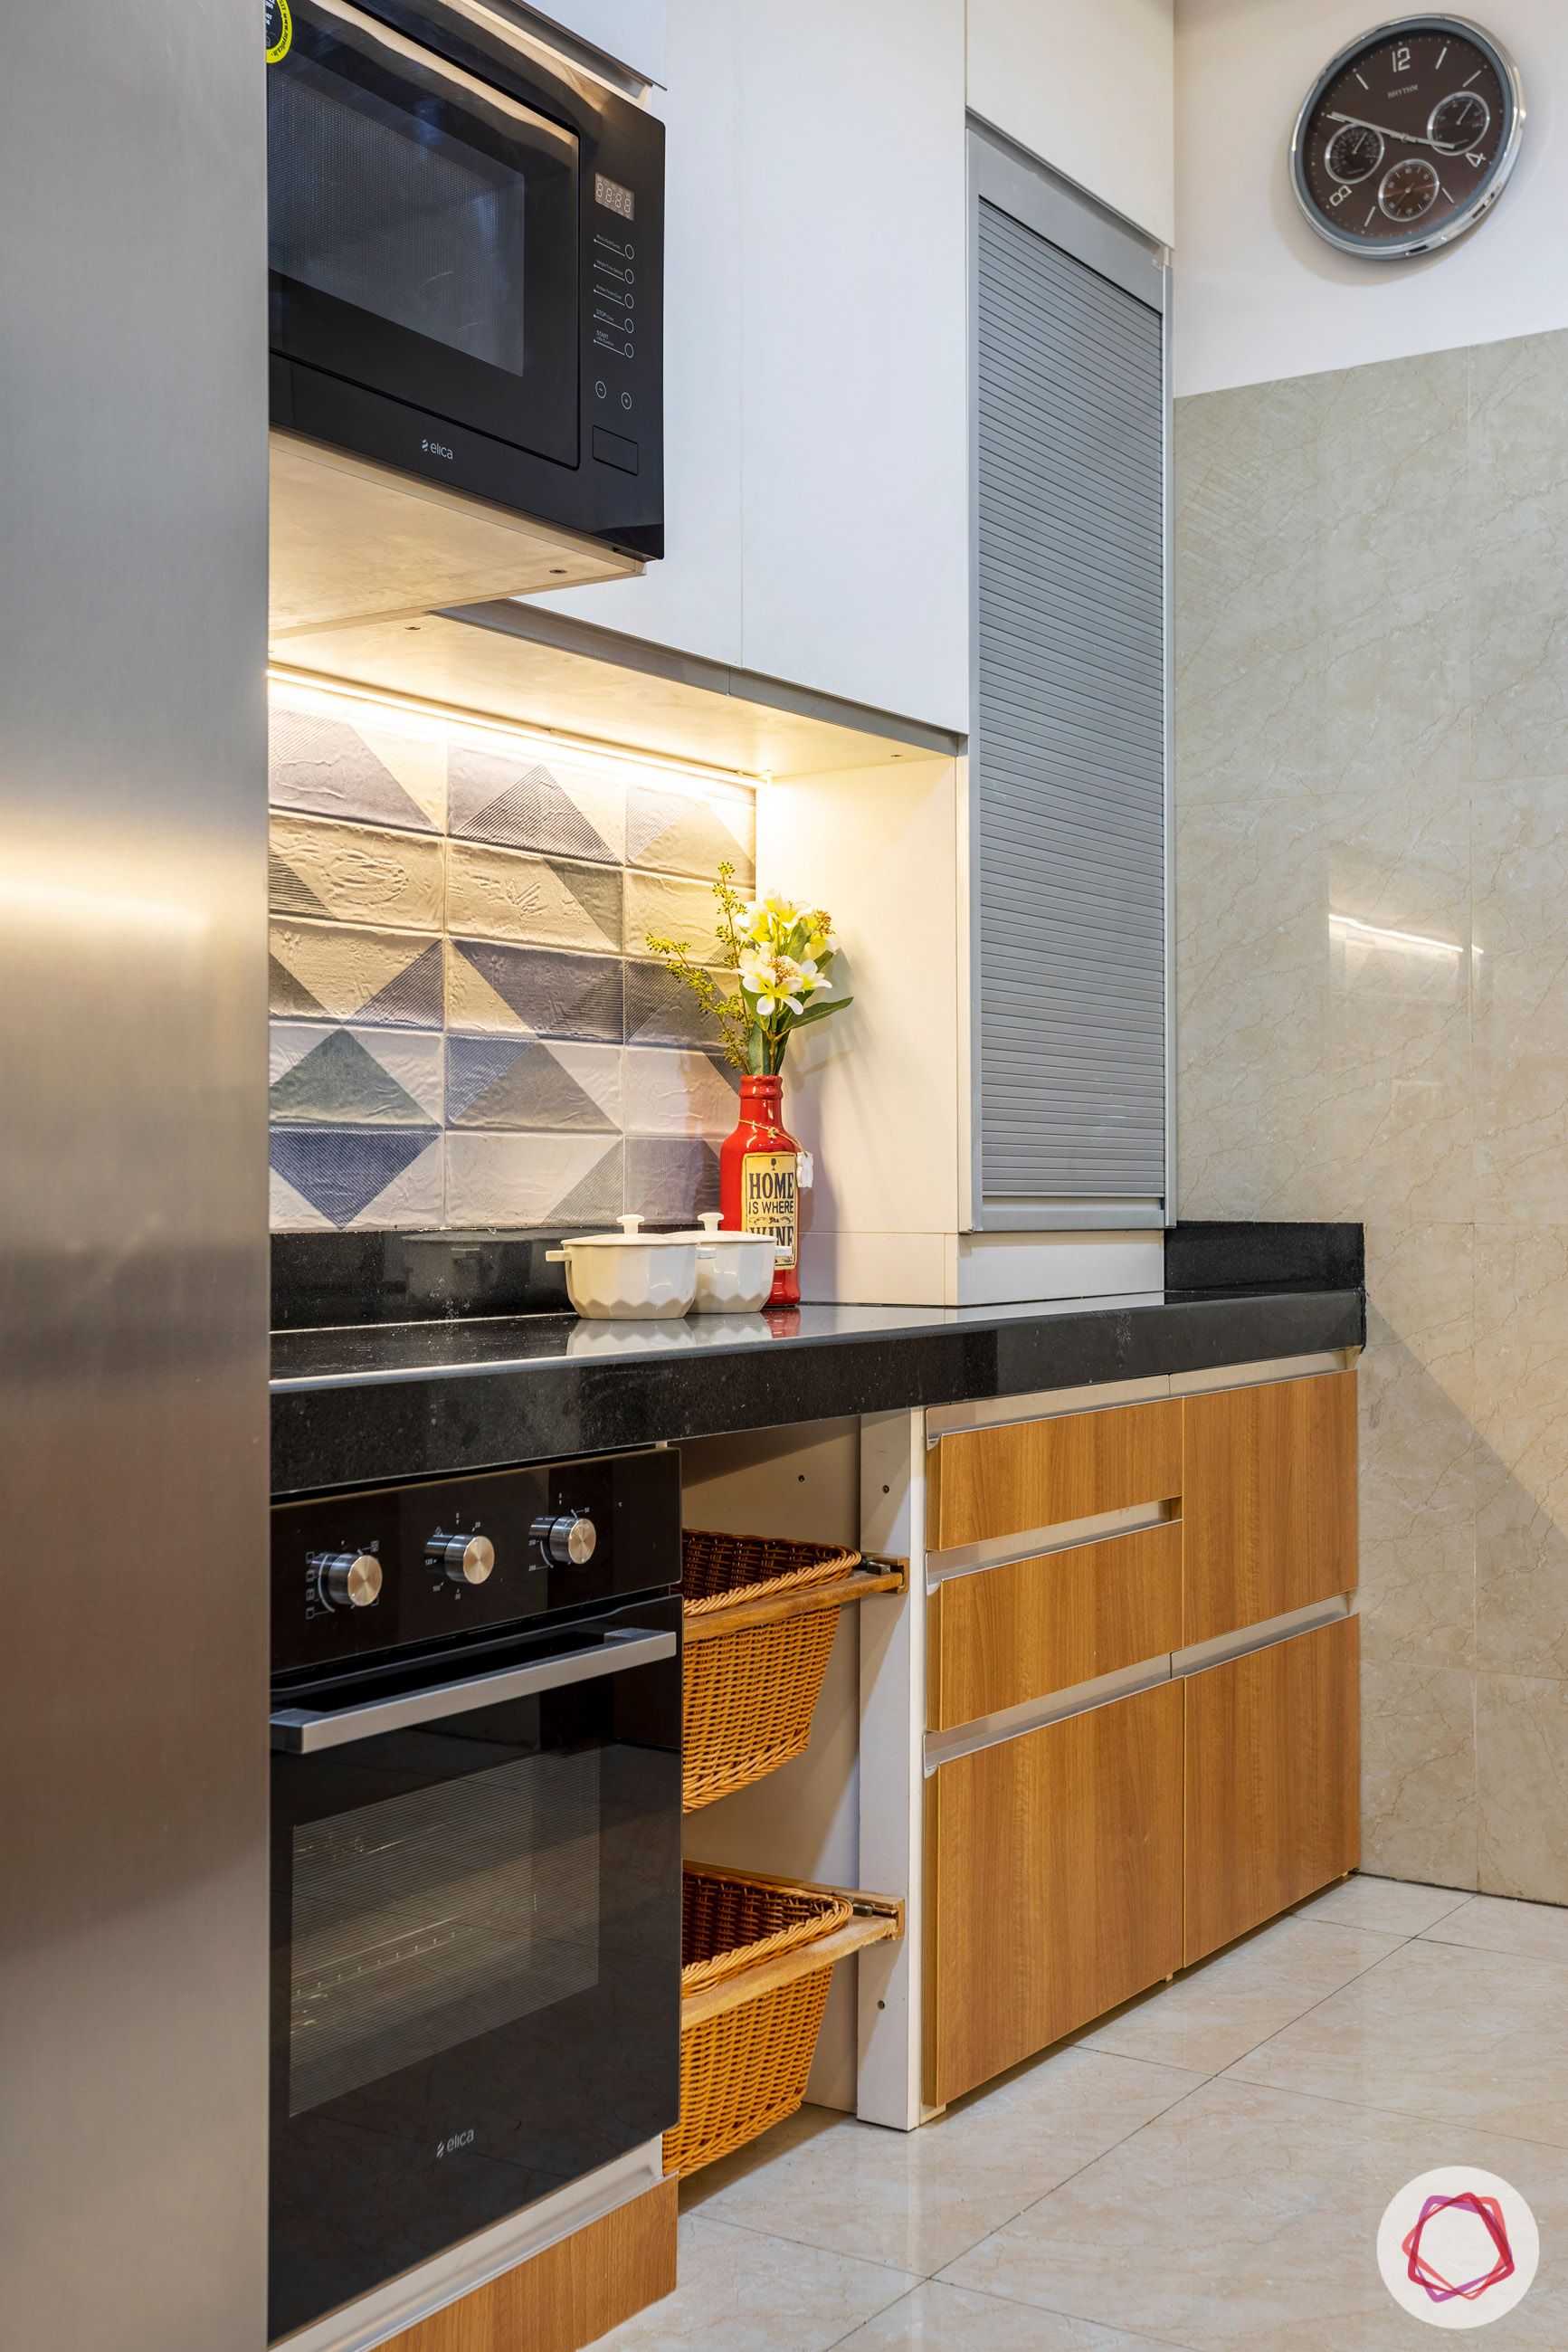 crescent-bay-parel-kitchen-cabinets-light-roller-shutter